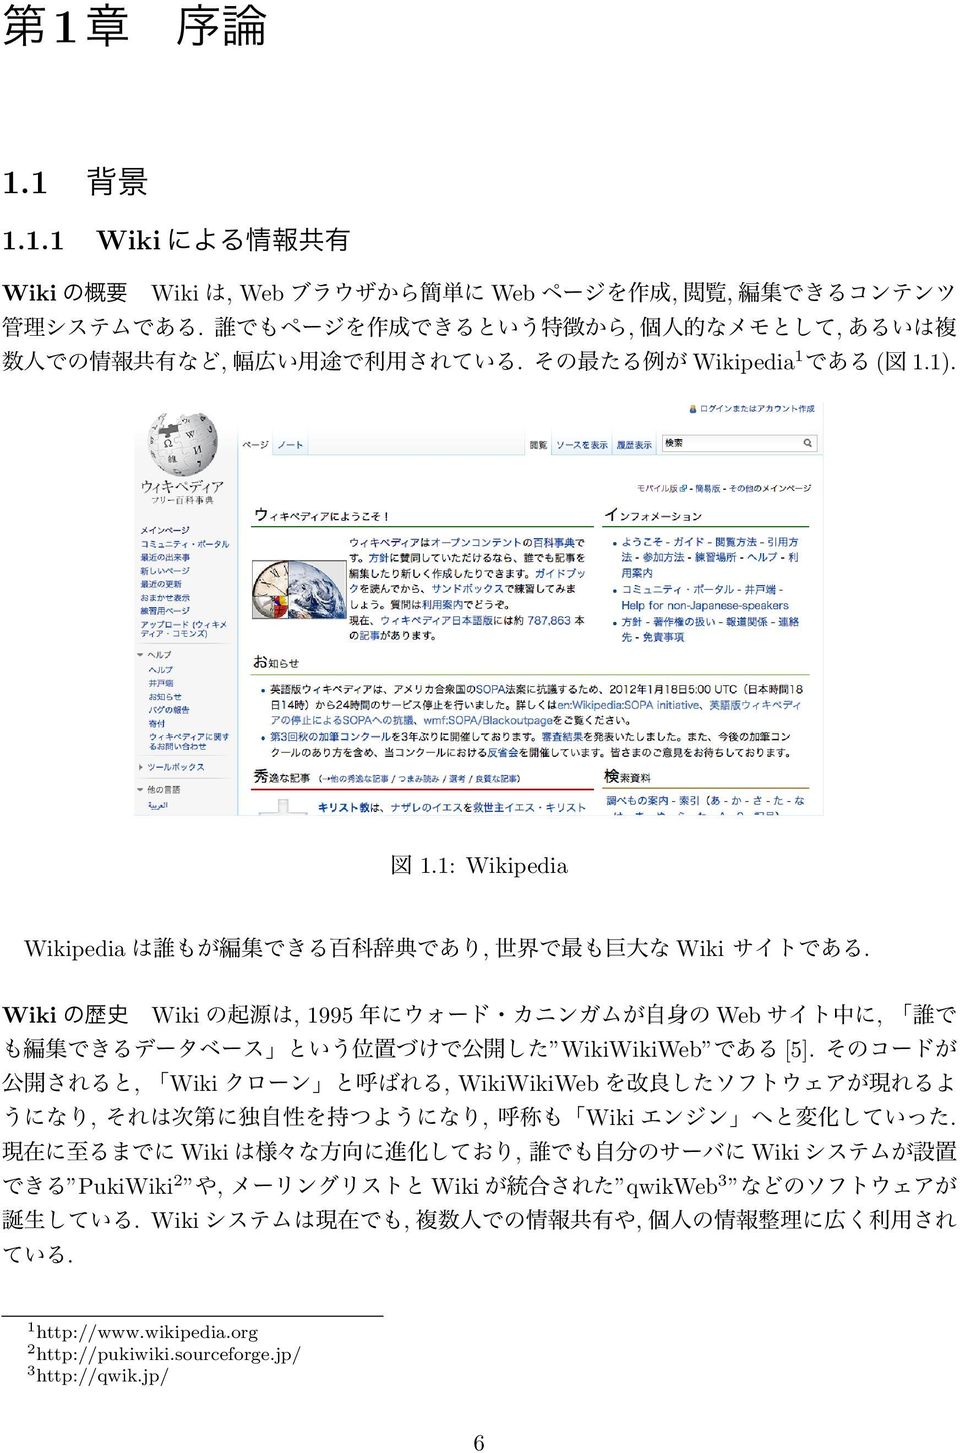 Wiki, Wiki PukiWiki 2, Wiki qwikweb 3. Wiki,,. 1 http://www.wikipedia.